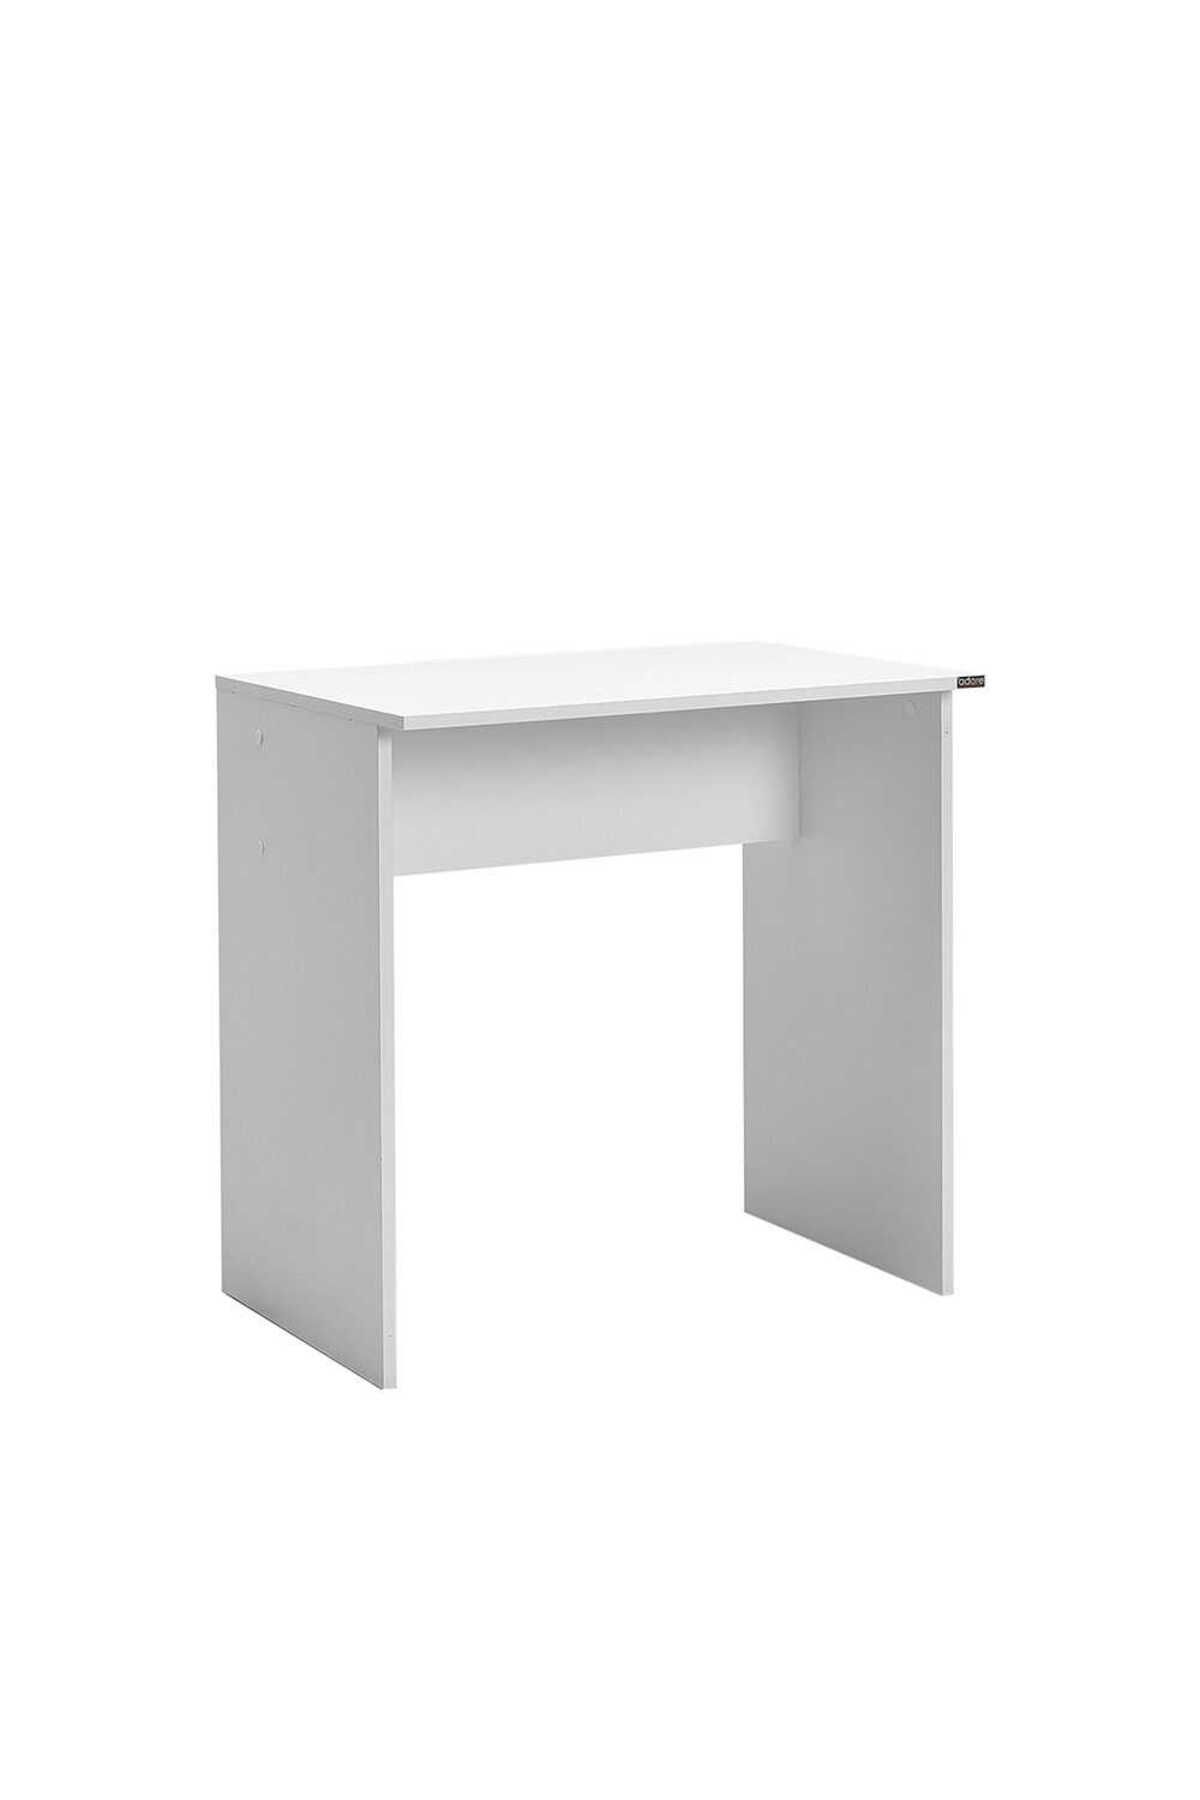 Adore Mobilya White Çalışma Masası -mat Beyaz 72x75x52 Cm (gxyxd)